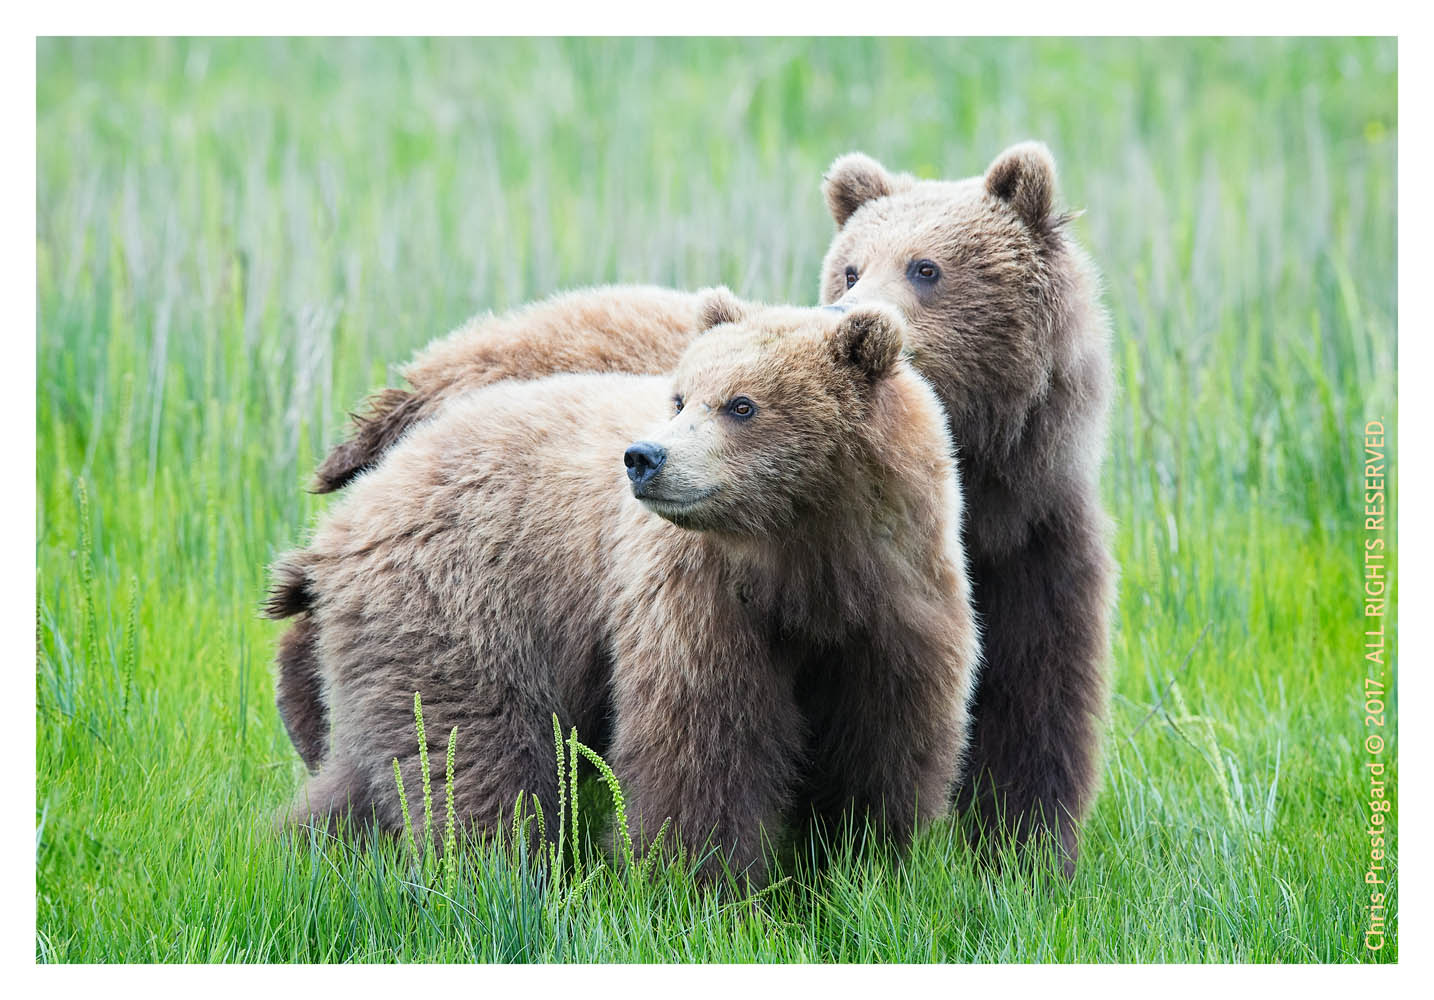 Coastal brown bears, Alaska June 2017